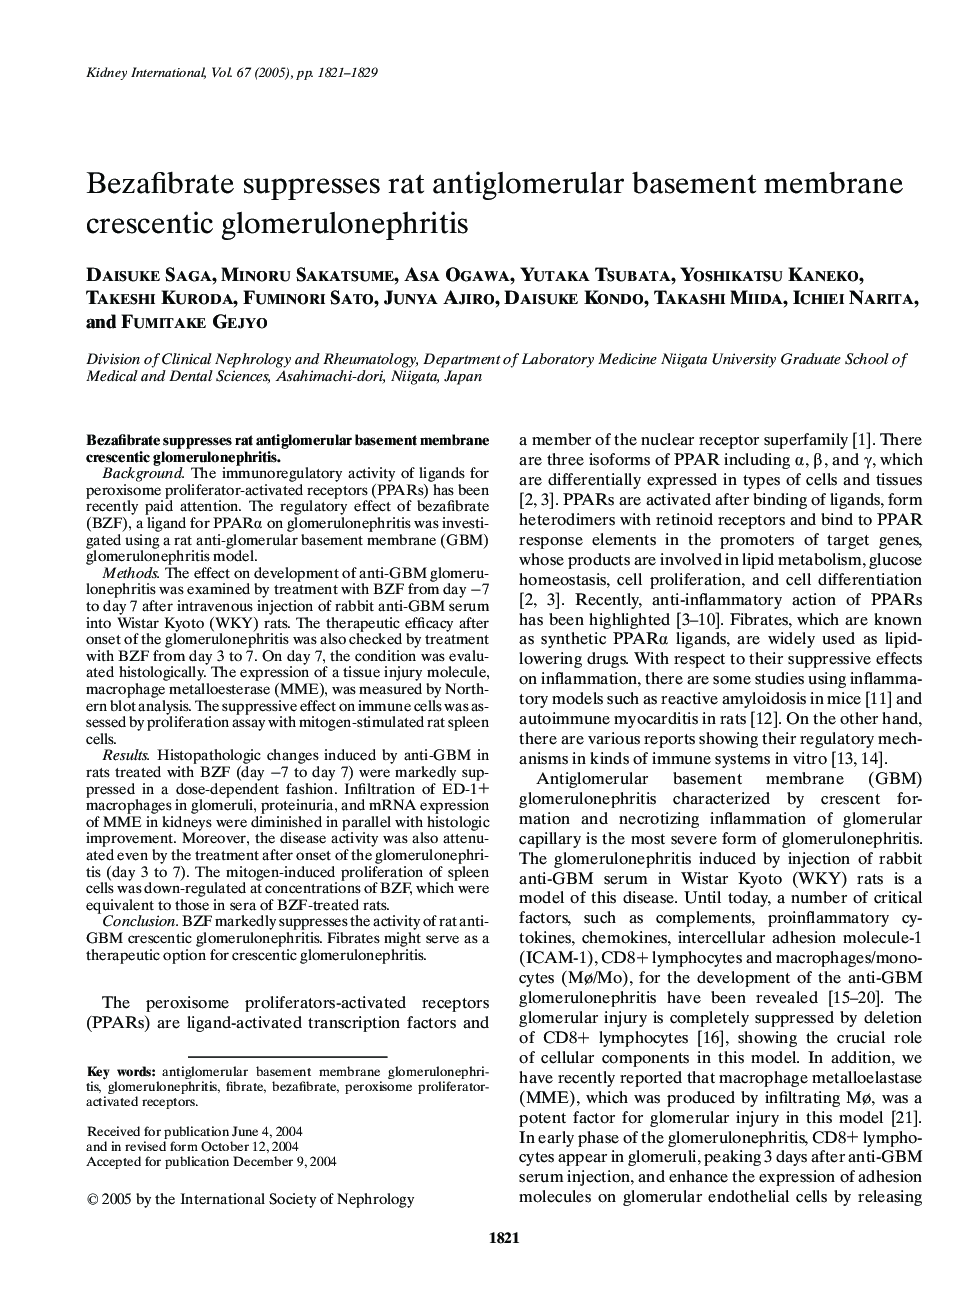 Bezafibrate suppresses rat antiglomerular basement membrane crescentic glomerulonephritis